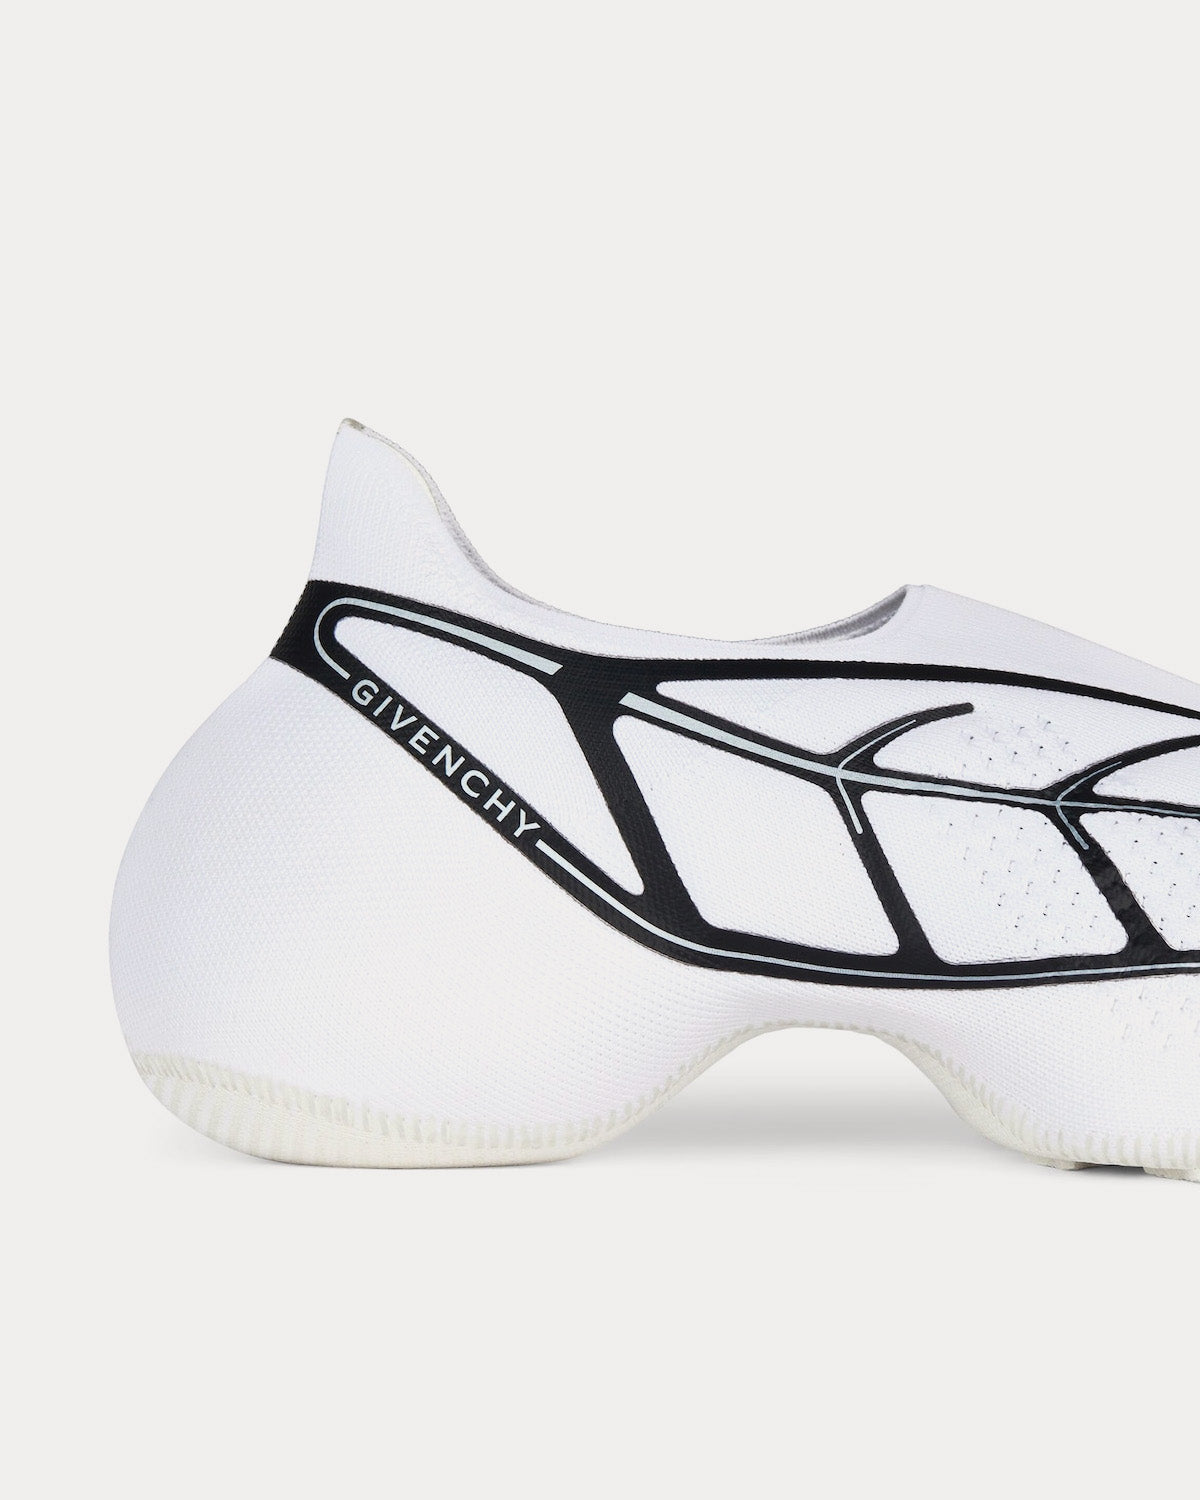 Givenchy - TK-360+ Mesh White / Black Slip On Sneakers